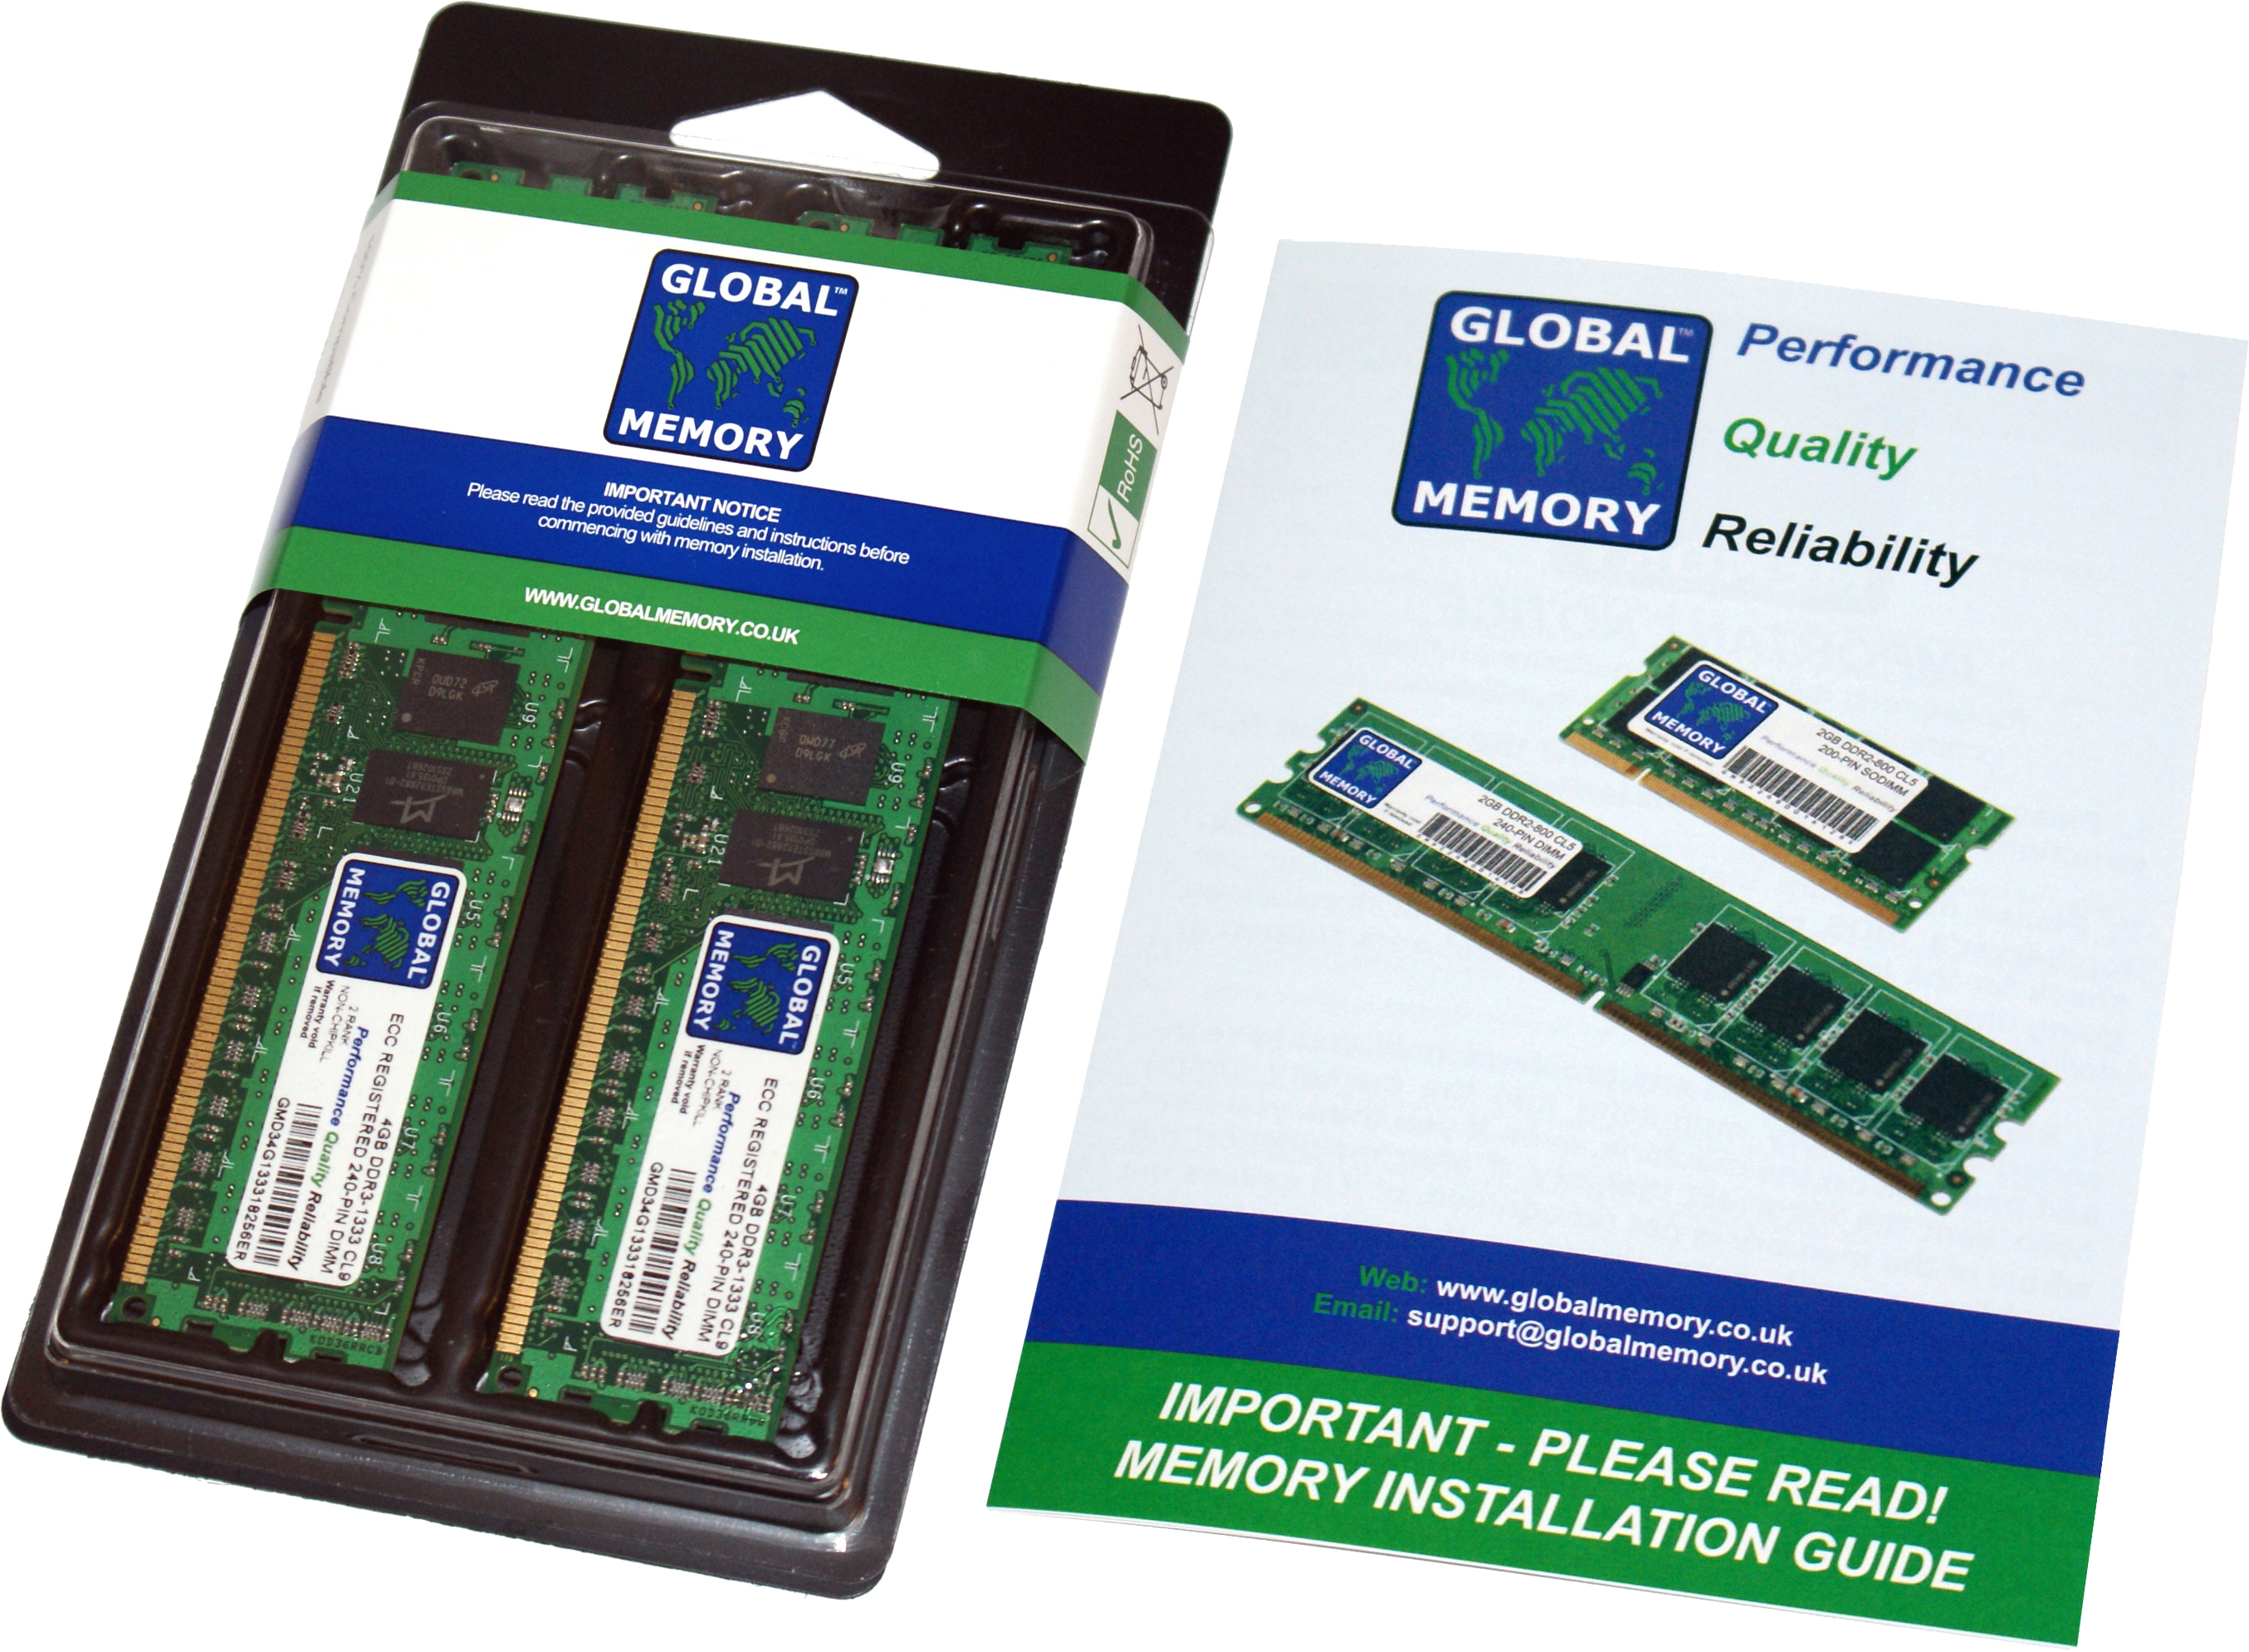 32GB (2 x 16GB) DDR4 2933MHz PC4-23400 288-PIN ECC REGISTERED DIMM (RDIMM) MEMORY RAM KIT FOR SERVERS/WORKSTATIONS/MOTHERBOARDS (4 RANK KIT CHIPKILL)